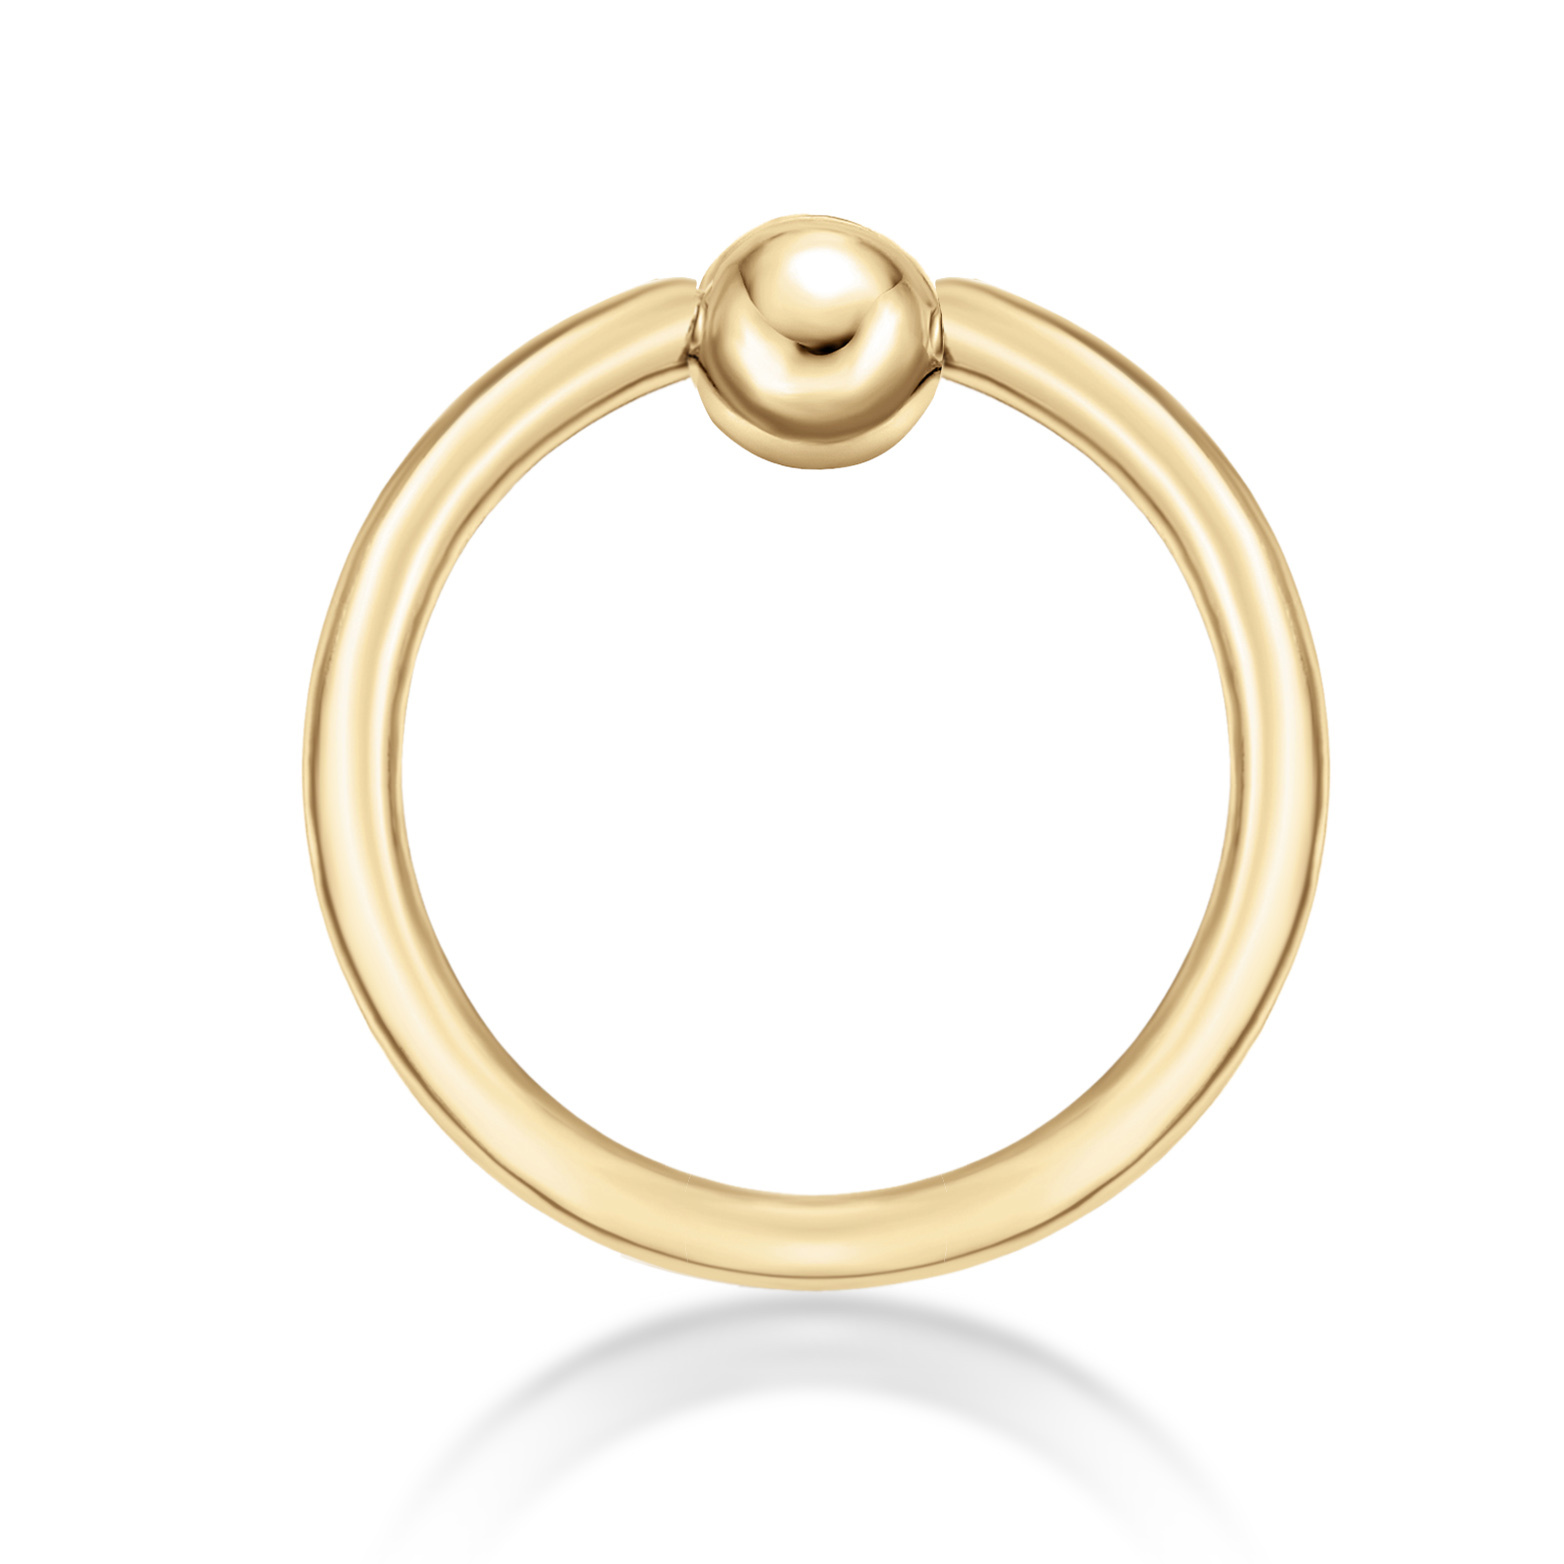 Women's Captive Bead Universal Hoop Ring, 14K Yellow Gold, 3/8 Inches, 10 MM, 16 Gauge | Lavari Jewelers